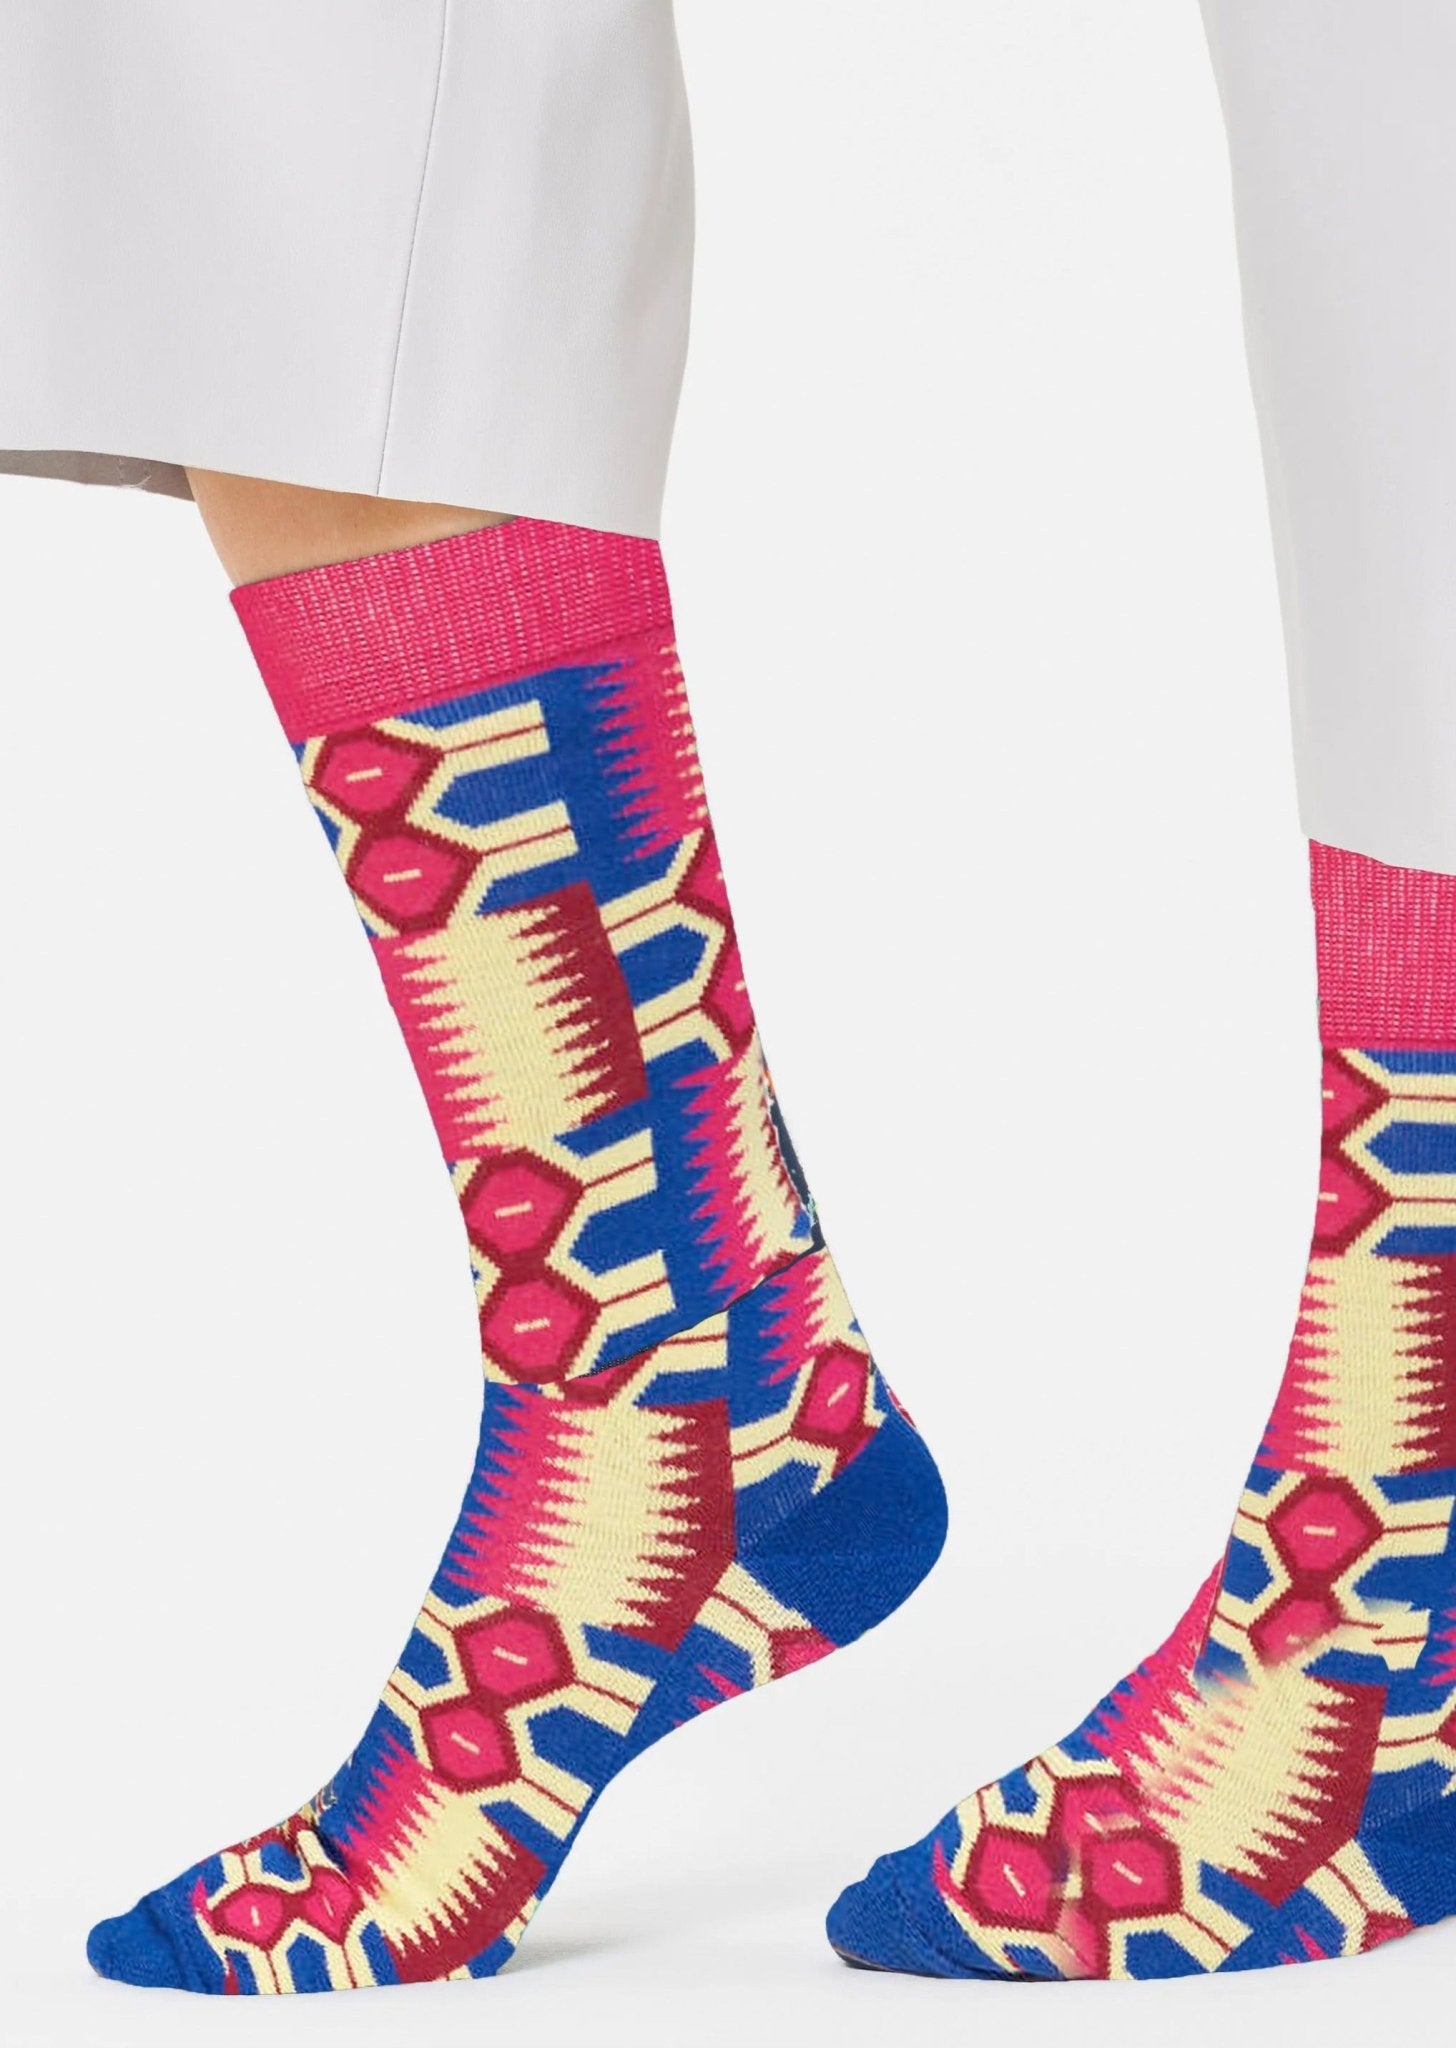 Socken aus Kenia - mikono.africa fair sozial nachhaltig designed in Kenia